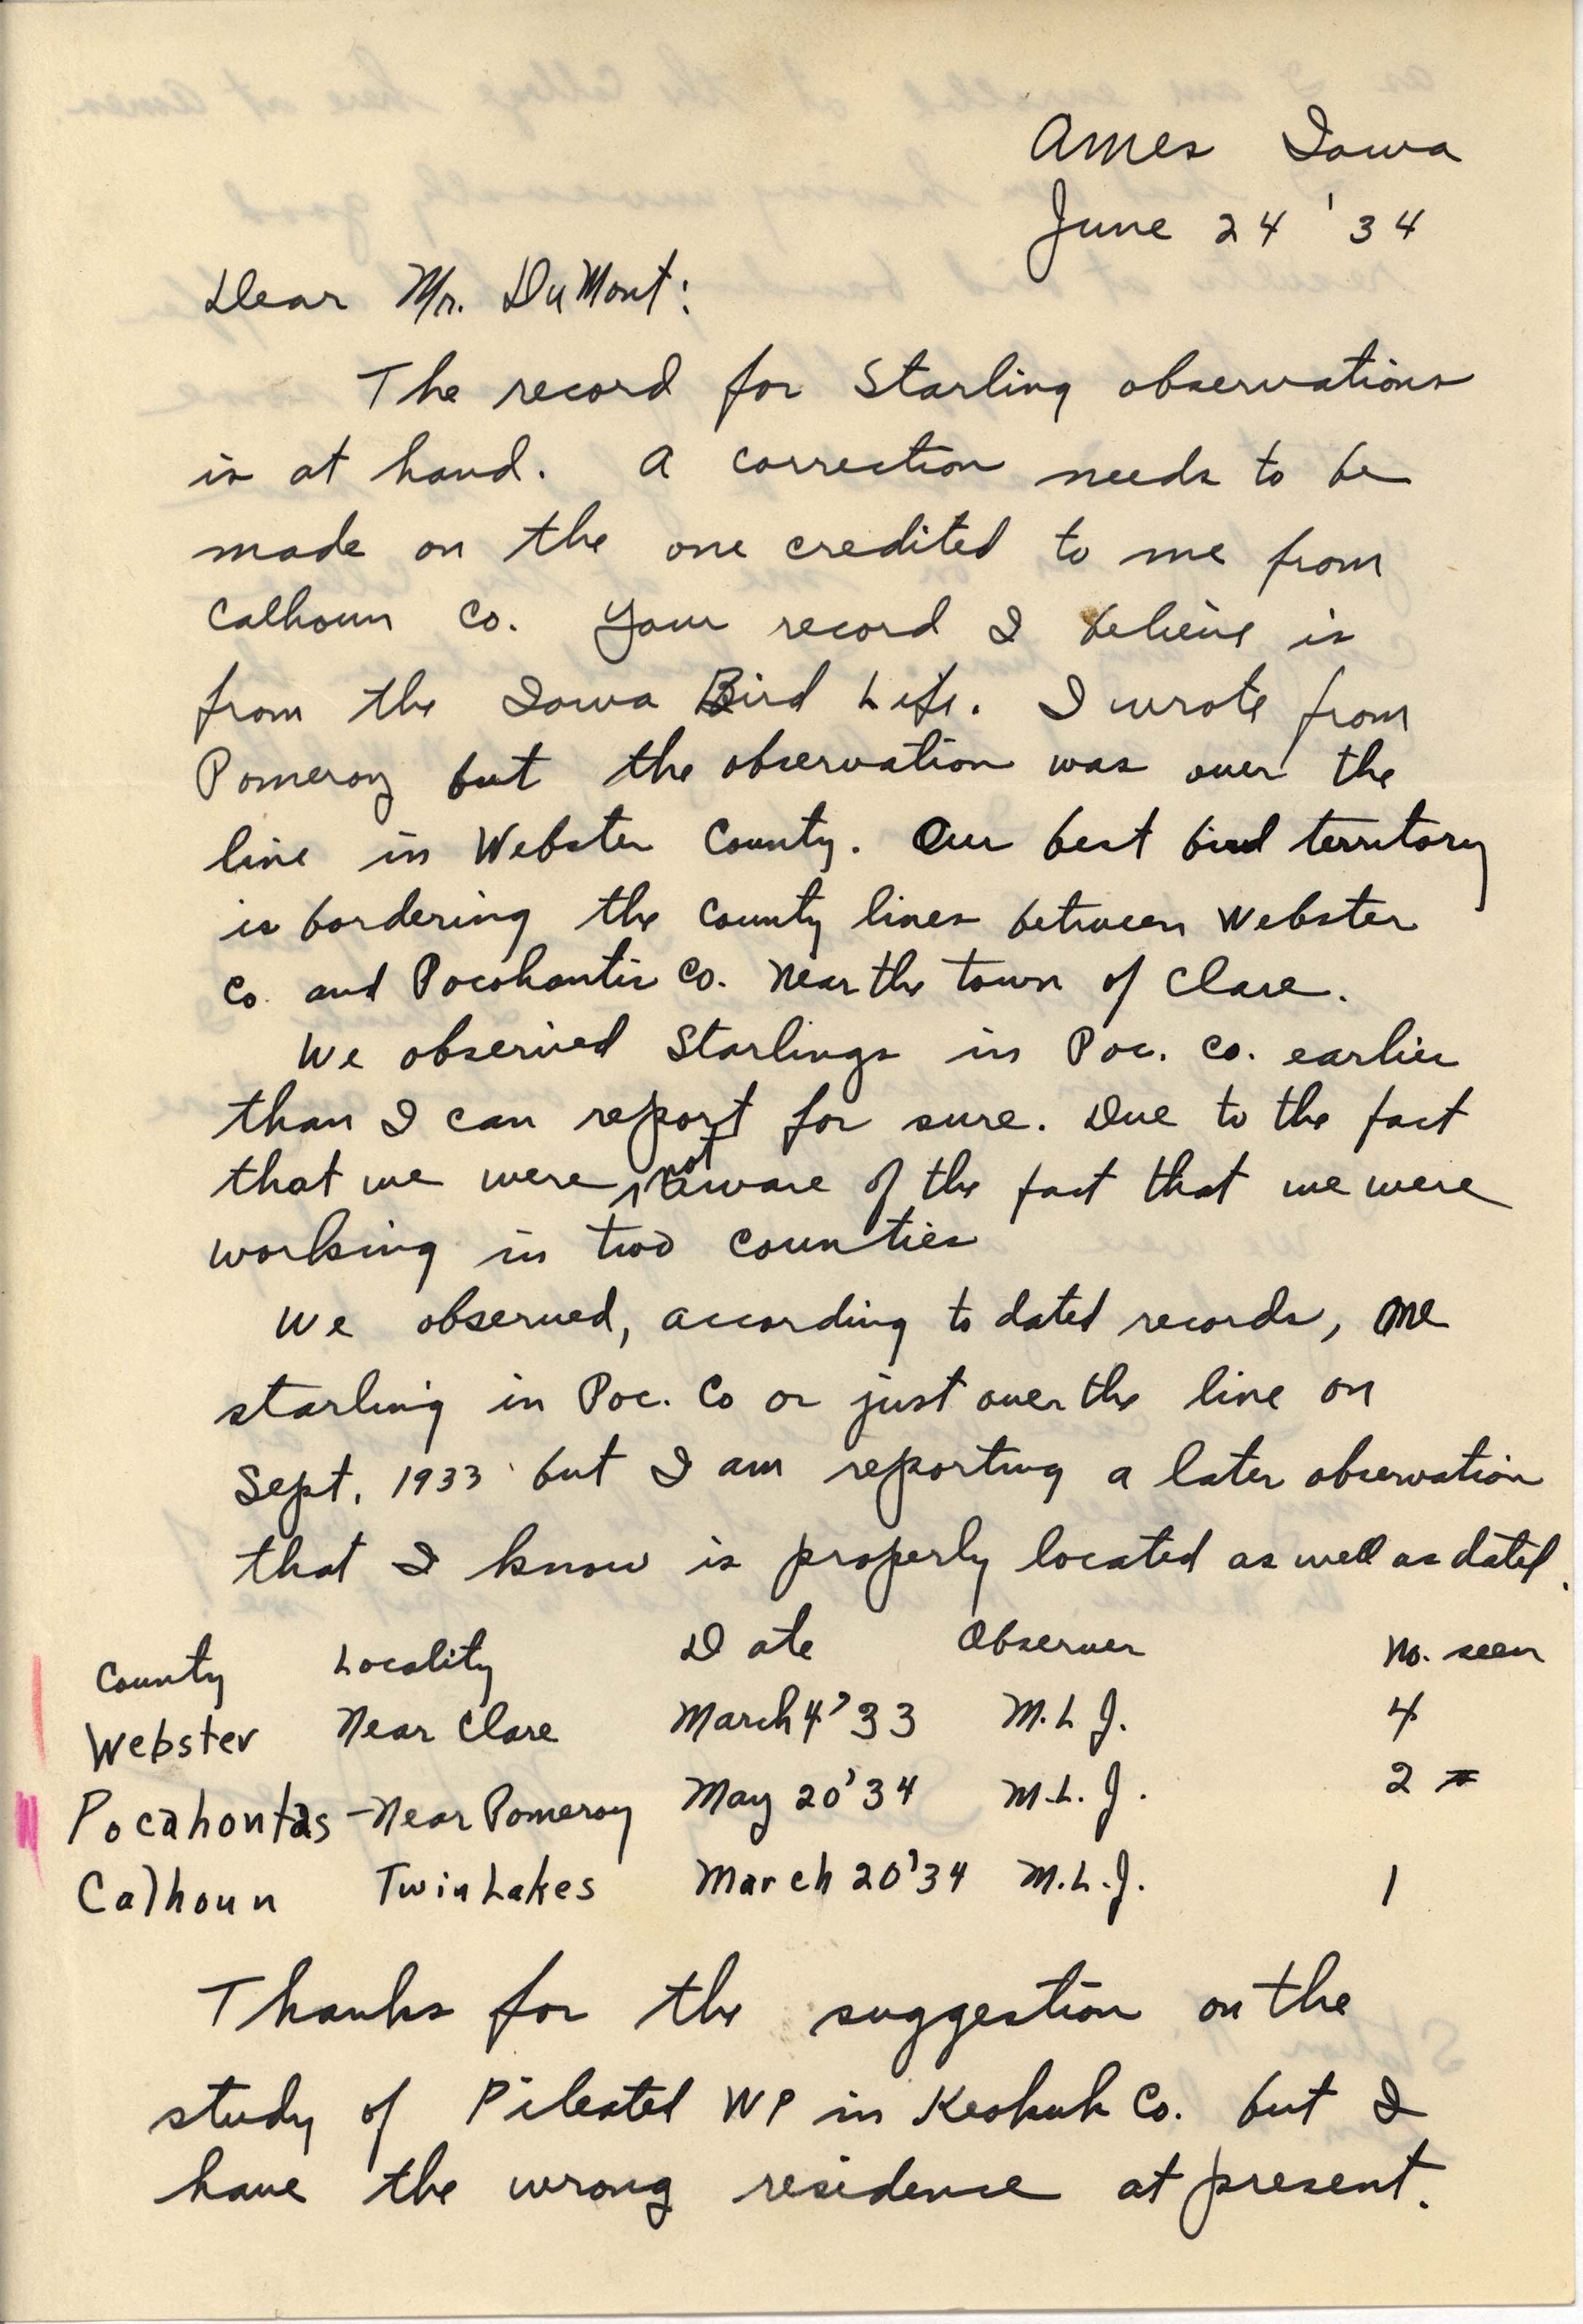 Myrle Jones letter to Philip DuMont regarding starling sightings, June 24, 1934